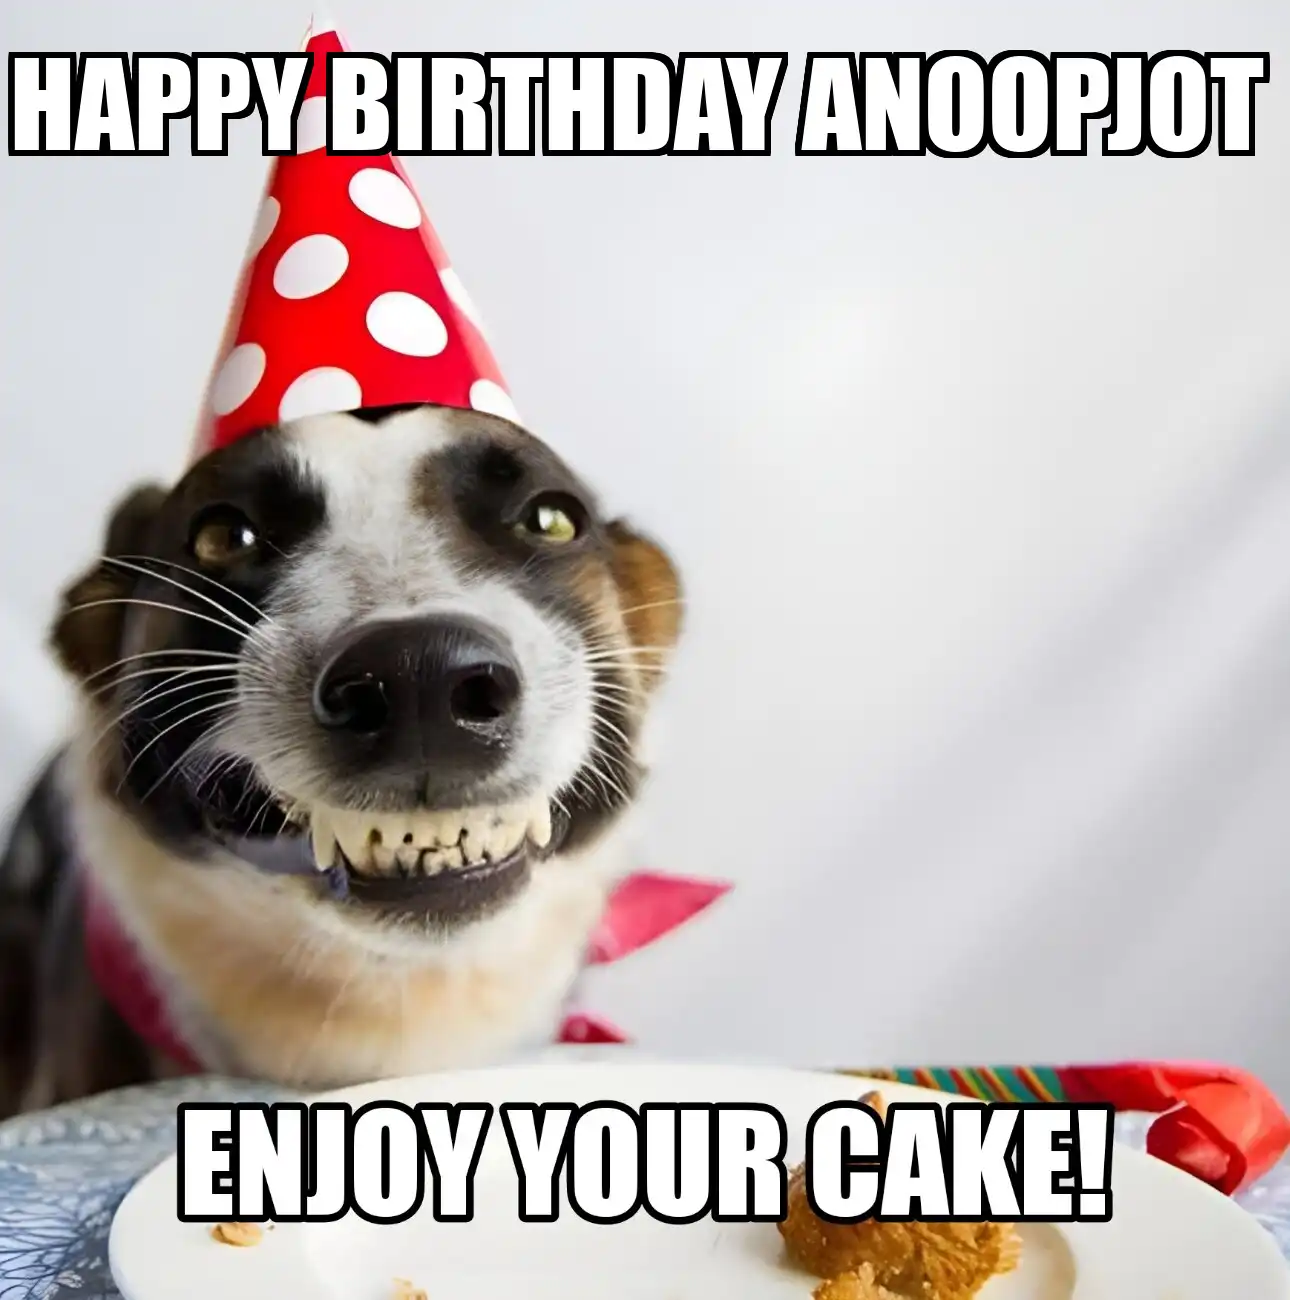 Happy Birthday Anoopjot Enjoy Your Cake Dog Meme